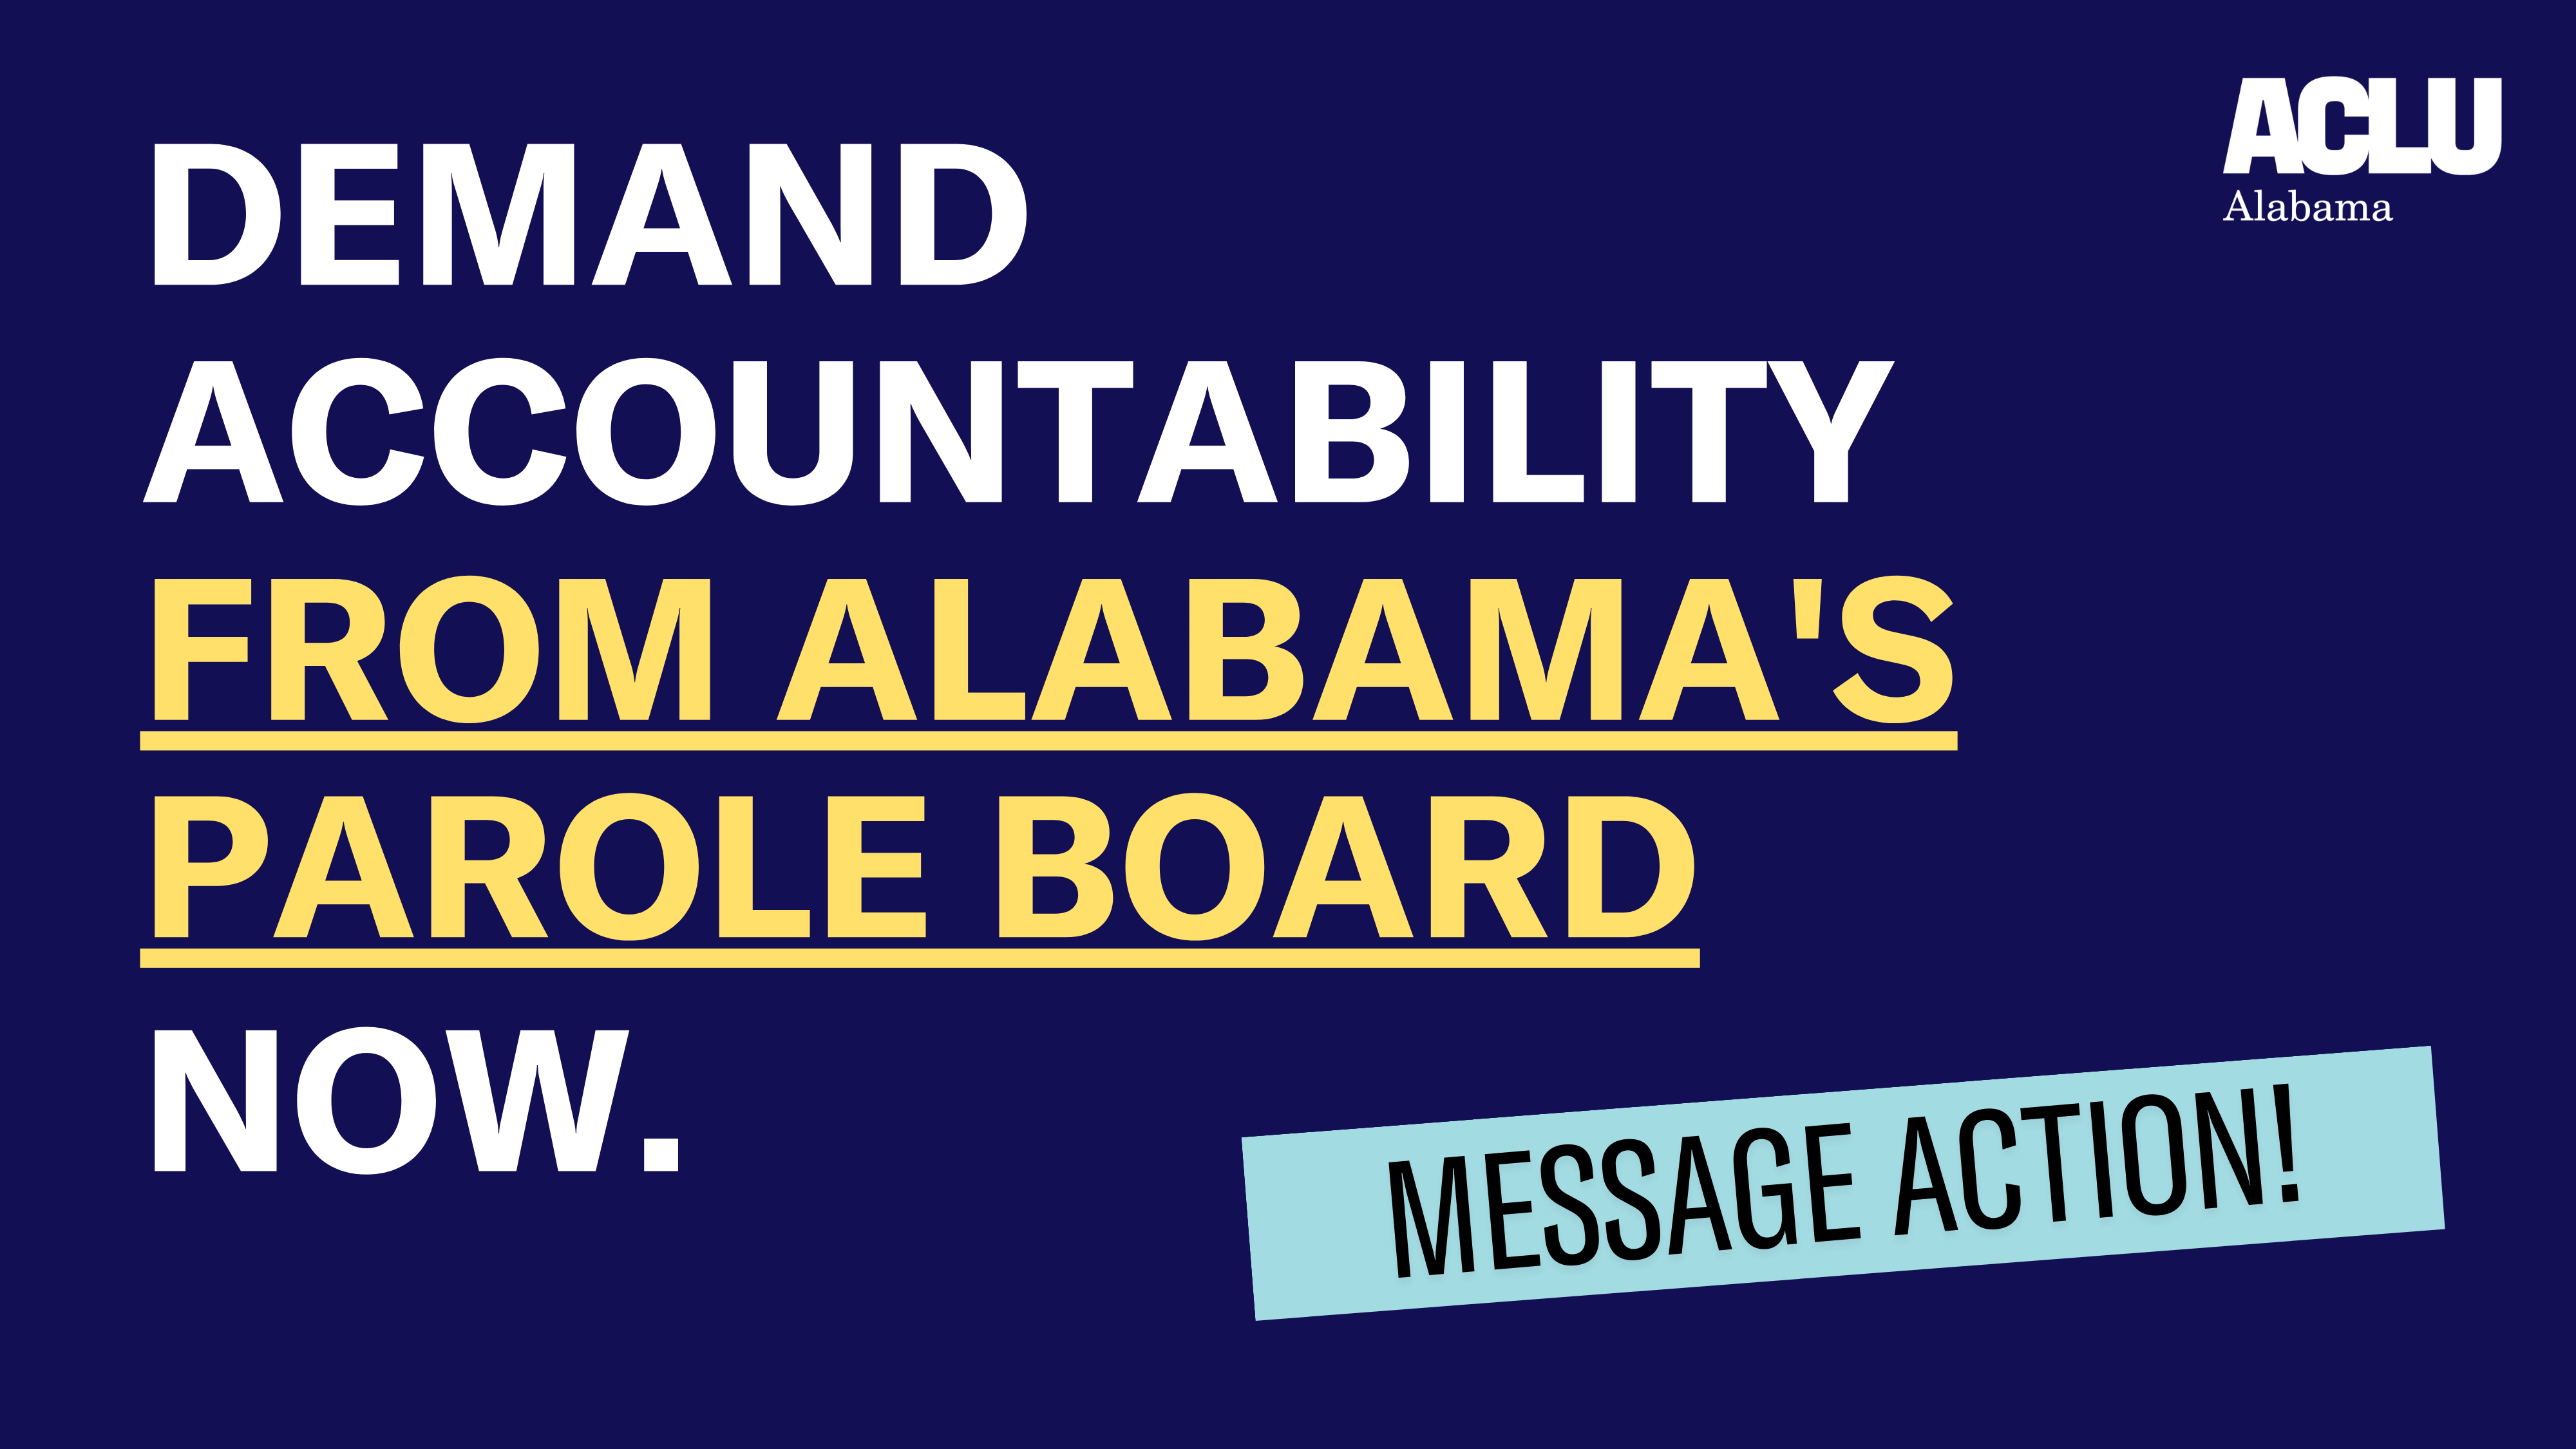 Demand accountability from Alabama's parole board.